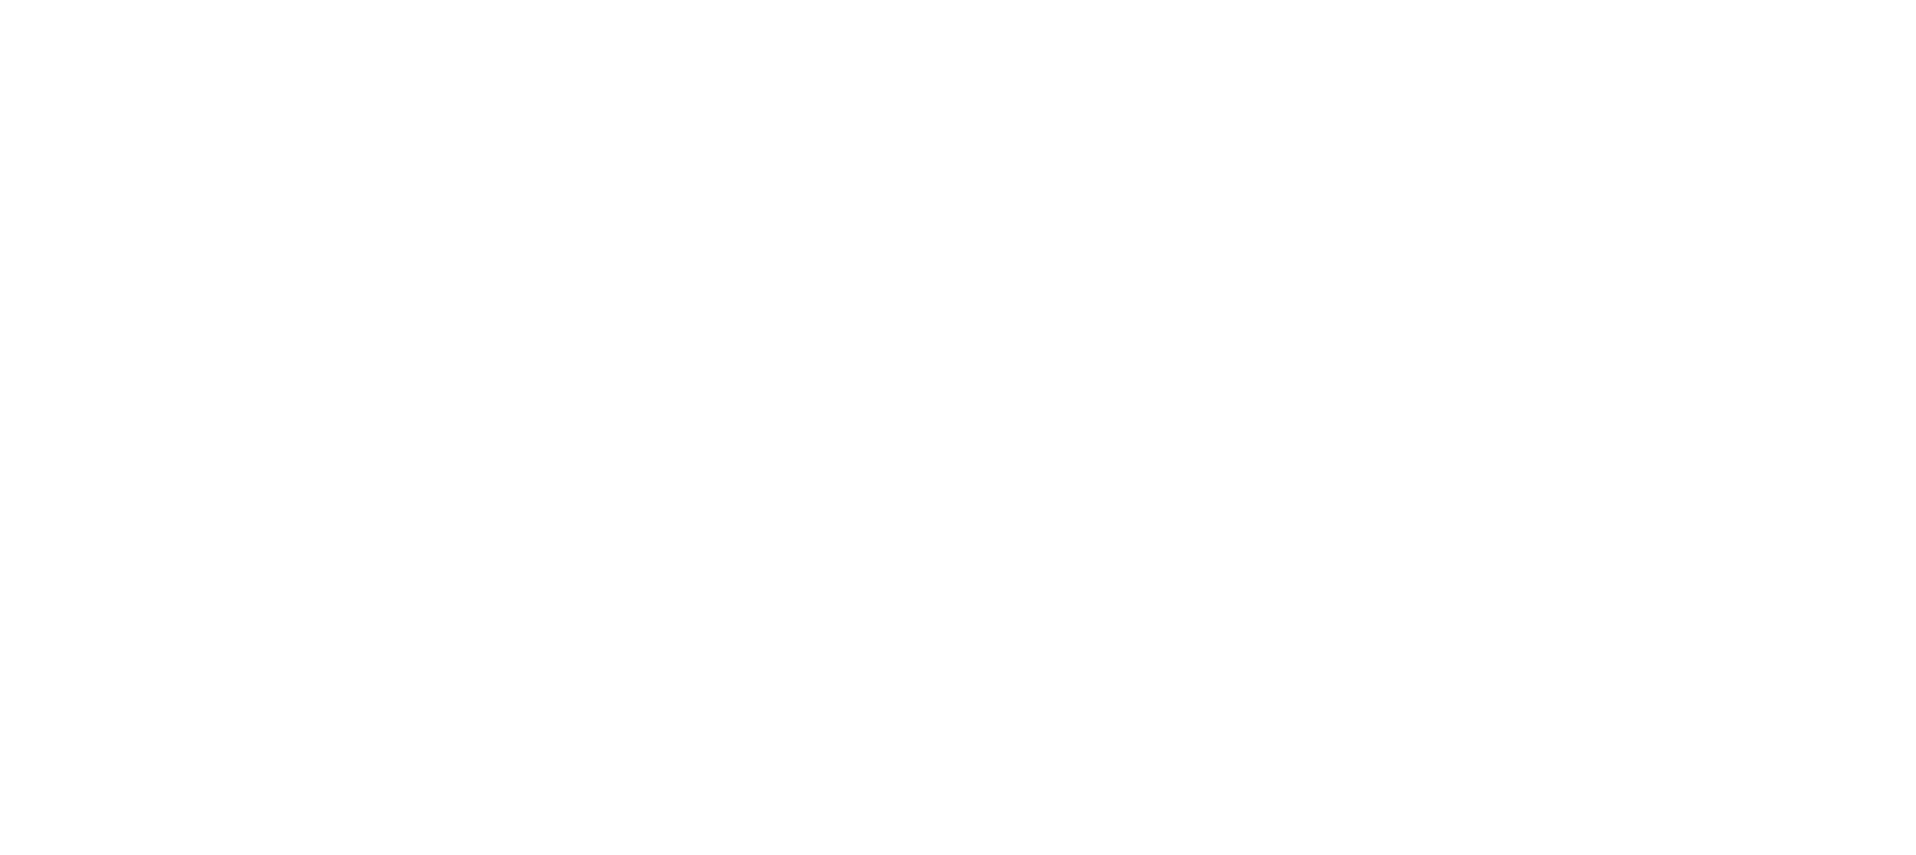 EdgeCore Digital Infrastructure